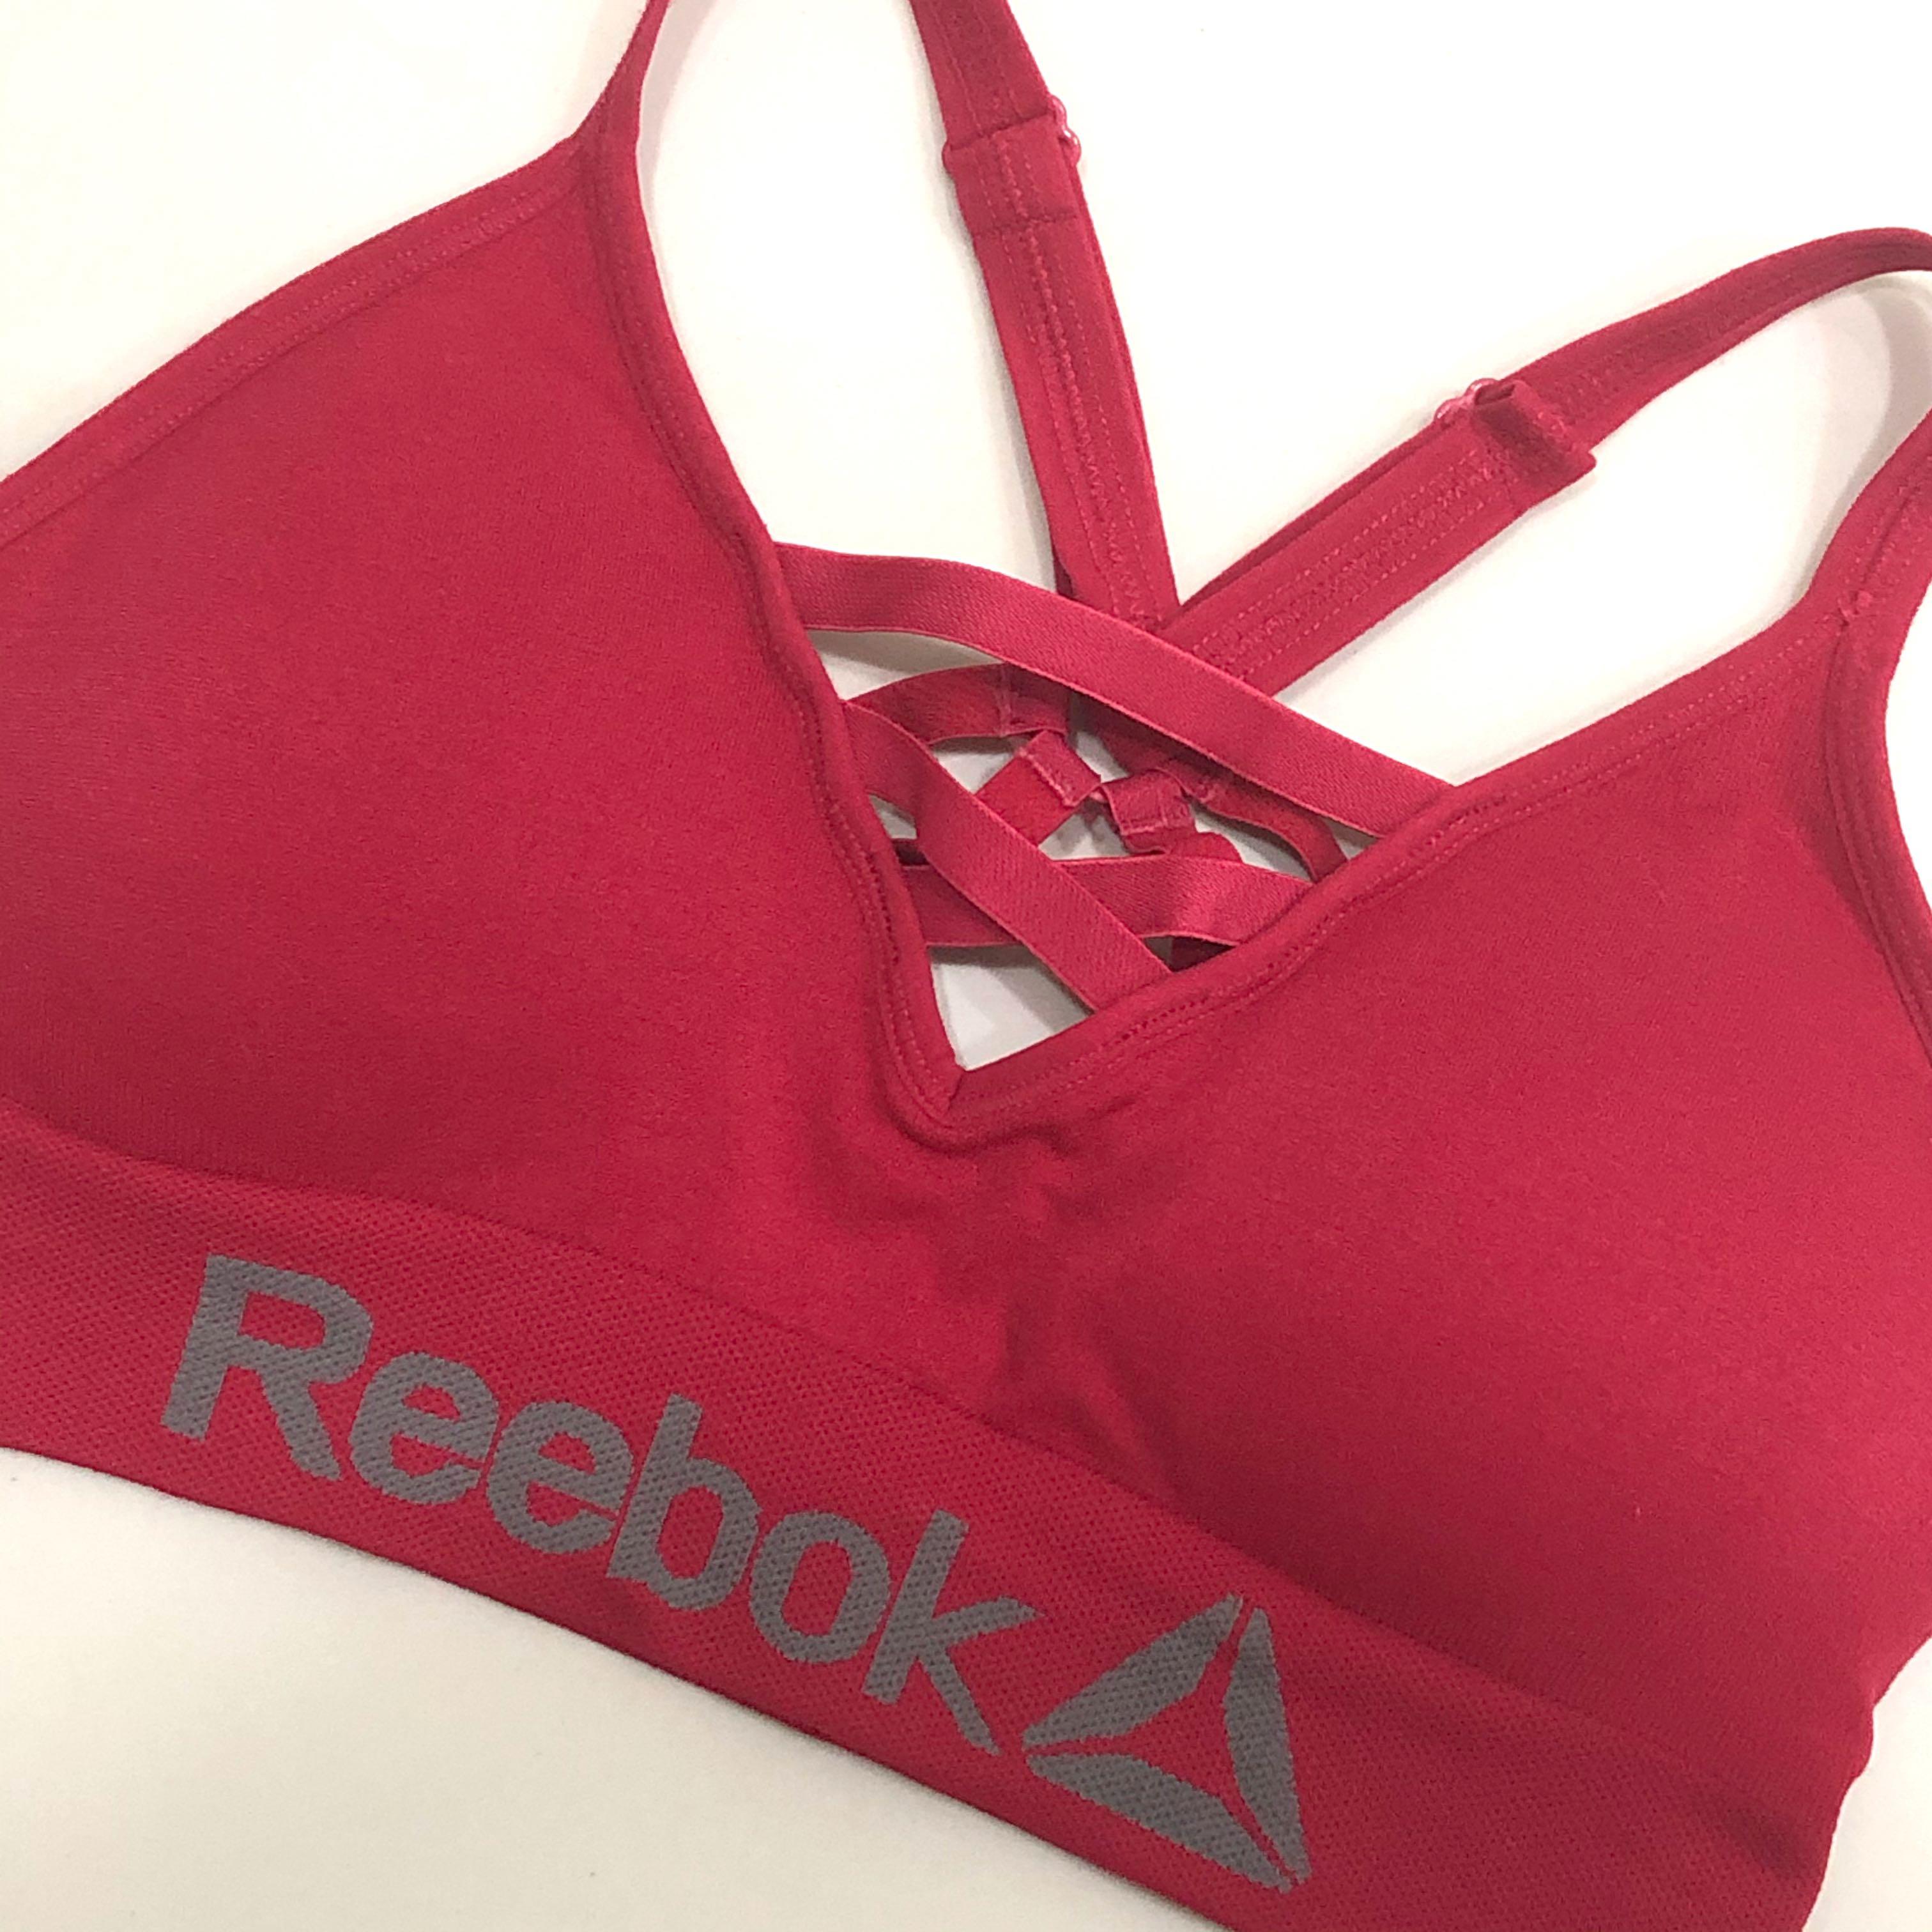 Reebok Red Strappy Sports Bra - XS Extra Small, Women's Fashion